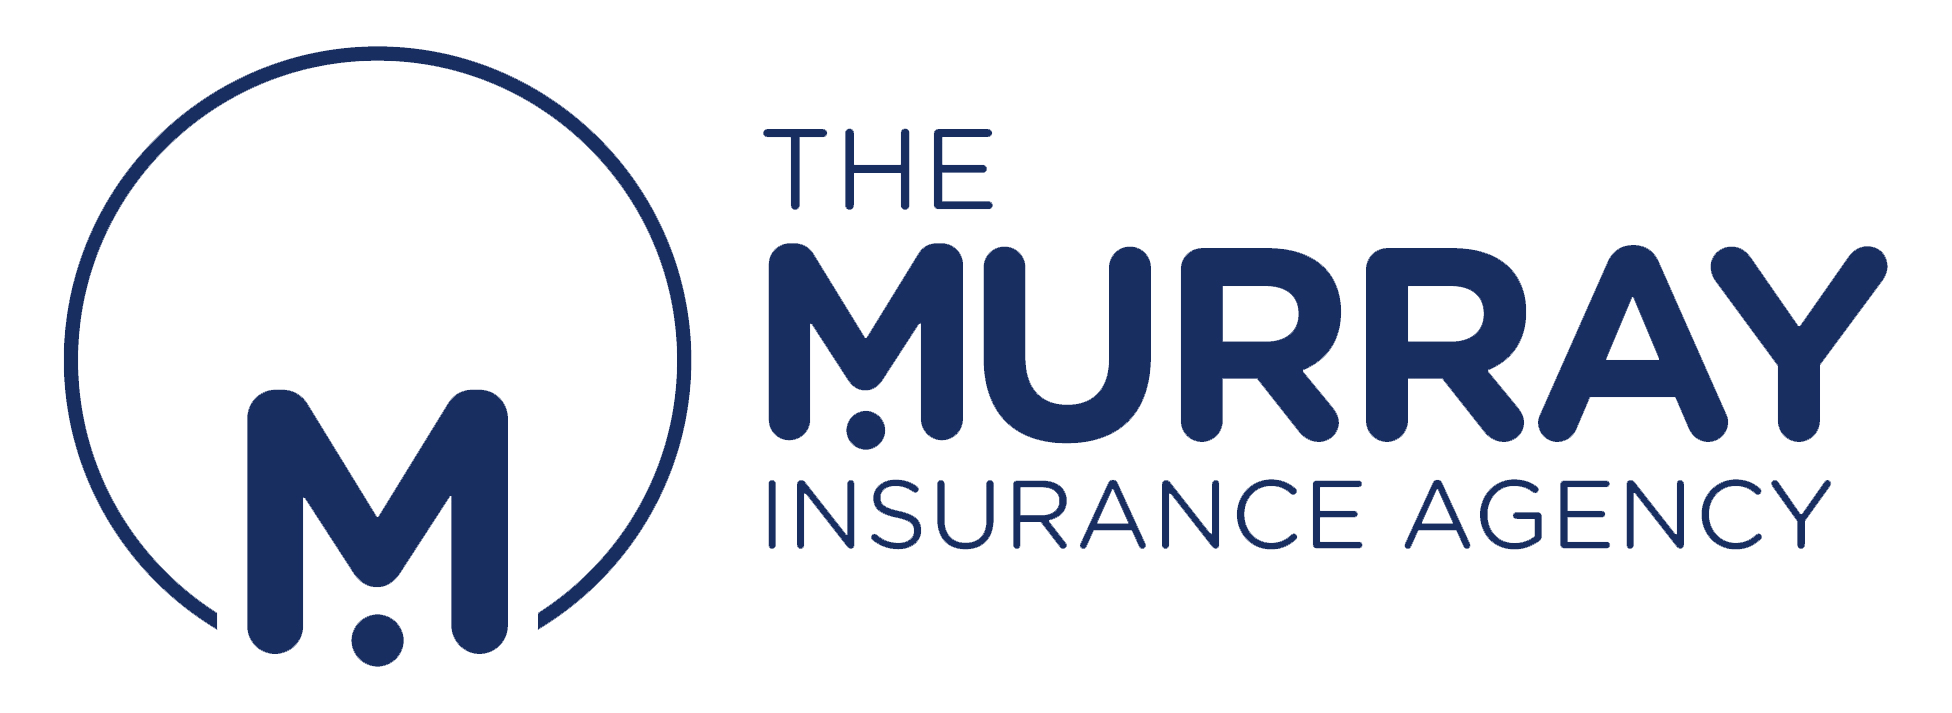 The Murray Insurance Agency